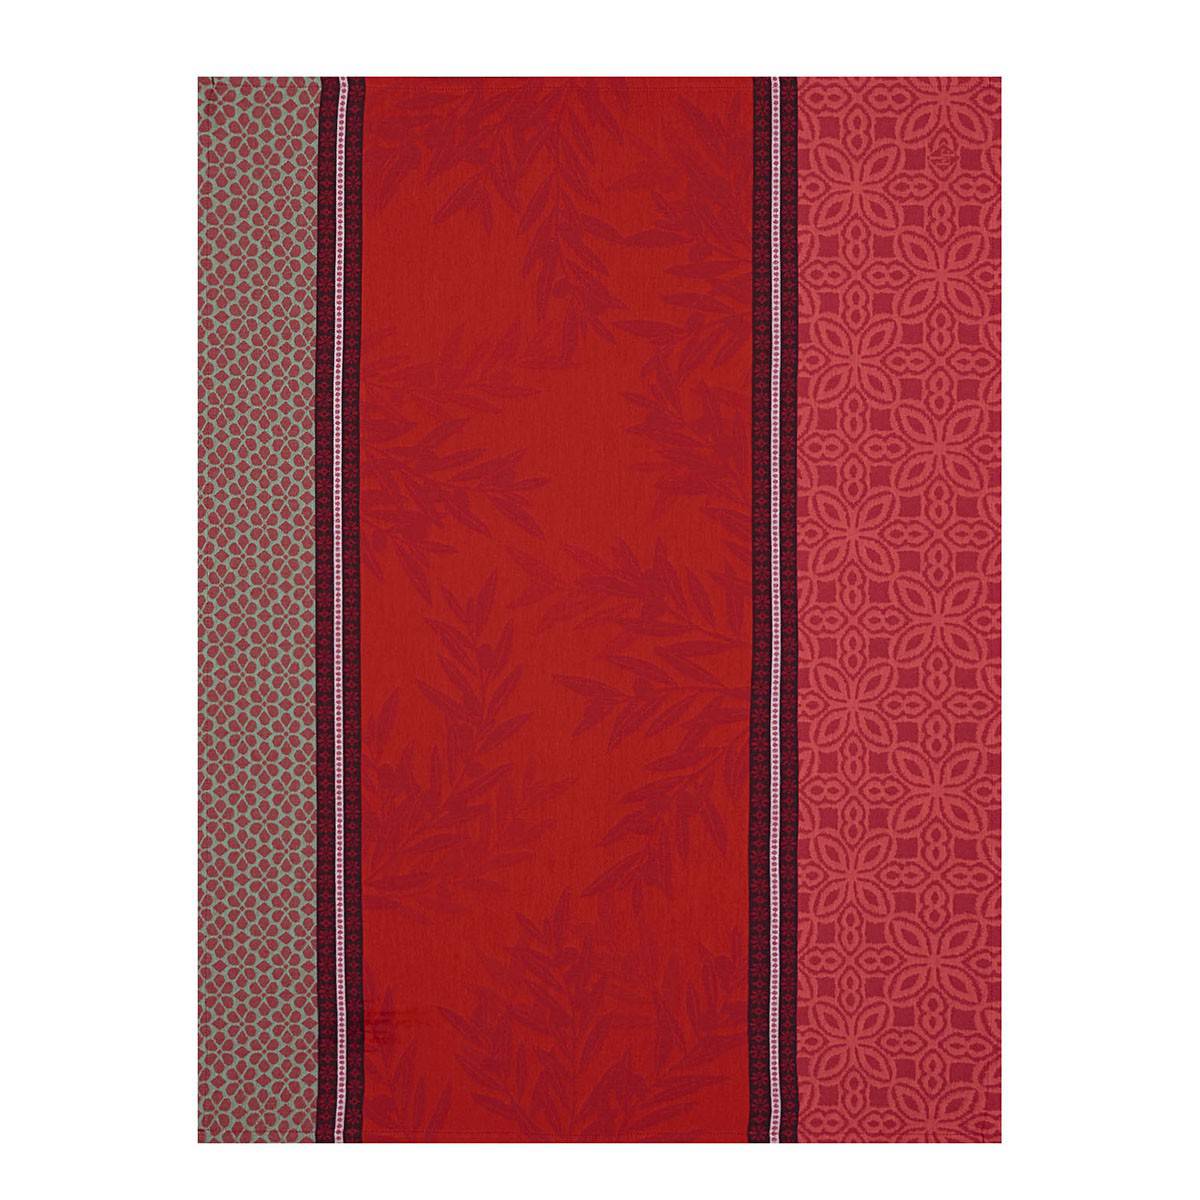 Le Jacquard Francais Luberon Tea Towel, 24 x 31-in, Red - Kitchen Universe